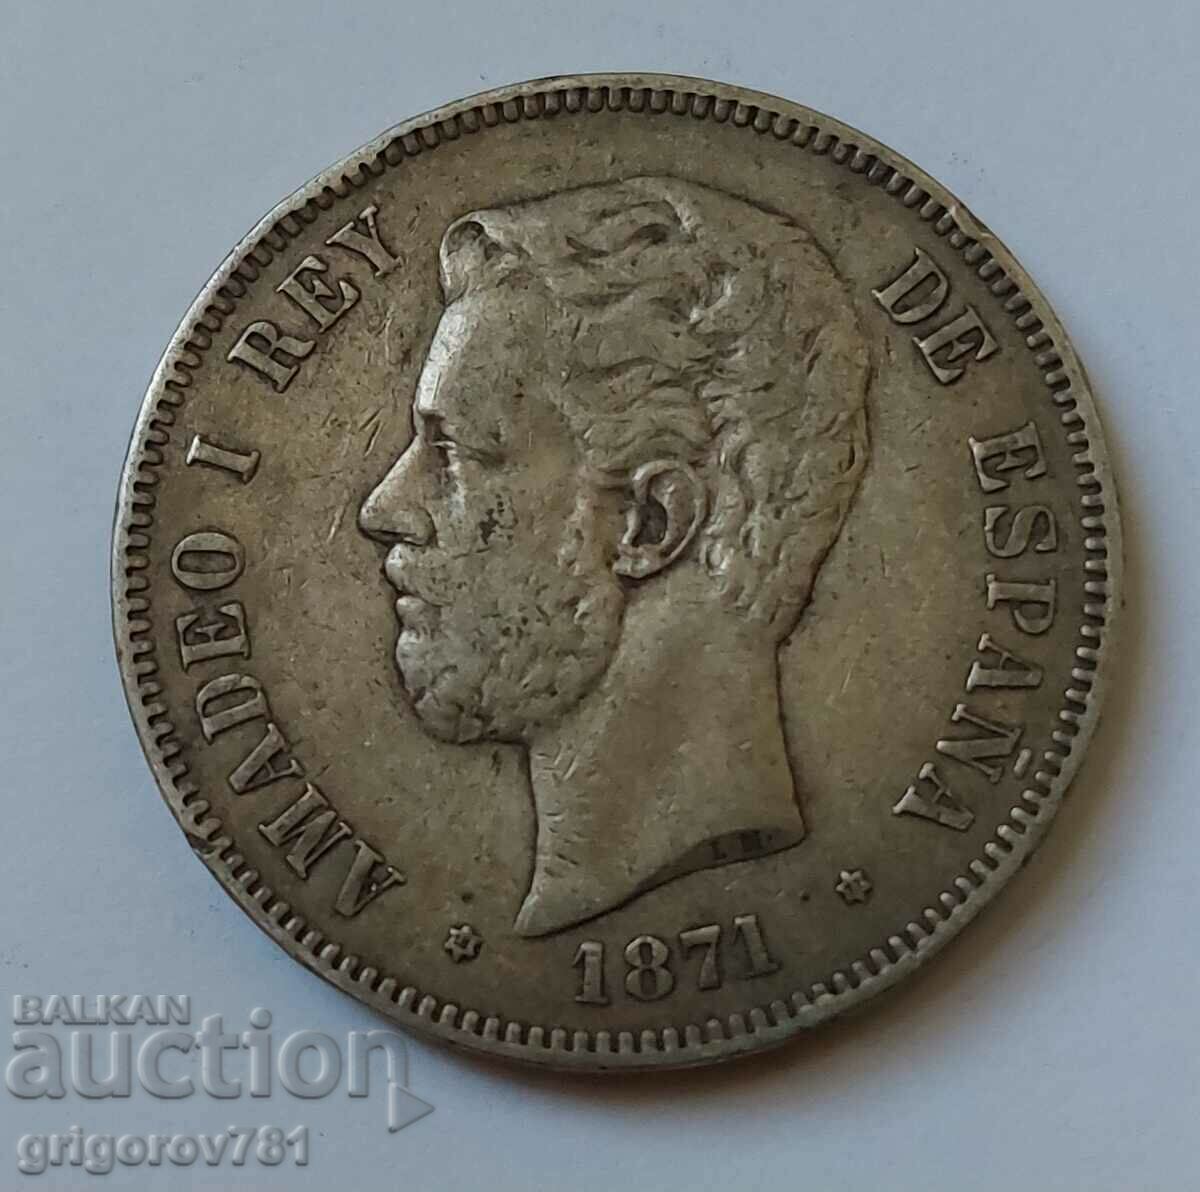 5 Pesetas Argint Spania 1871 - Moneda de argint #9